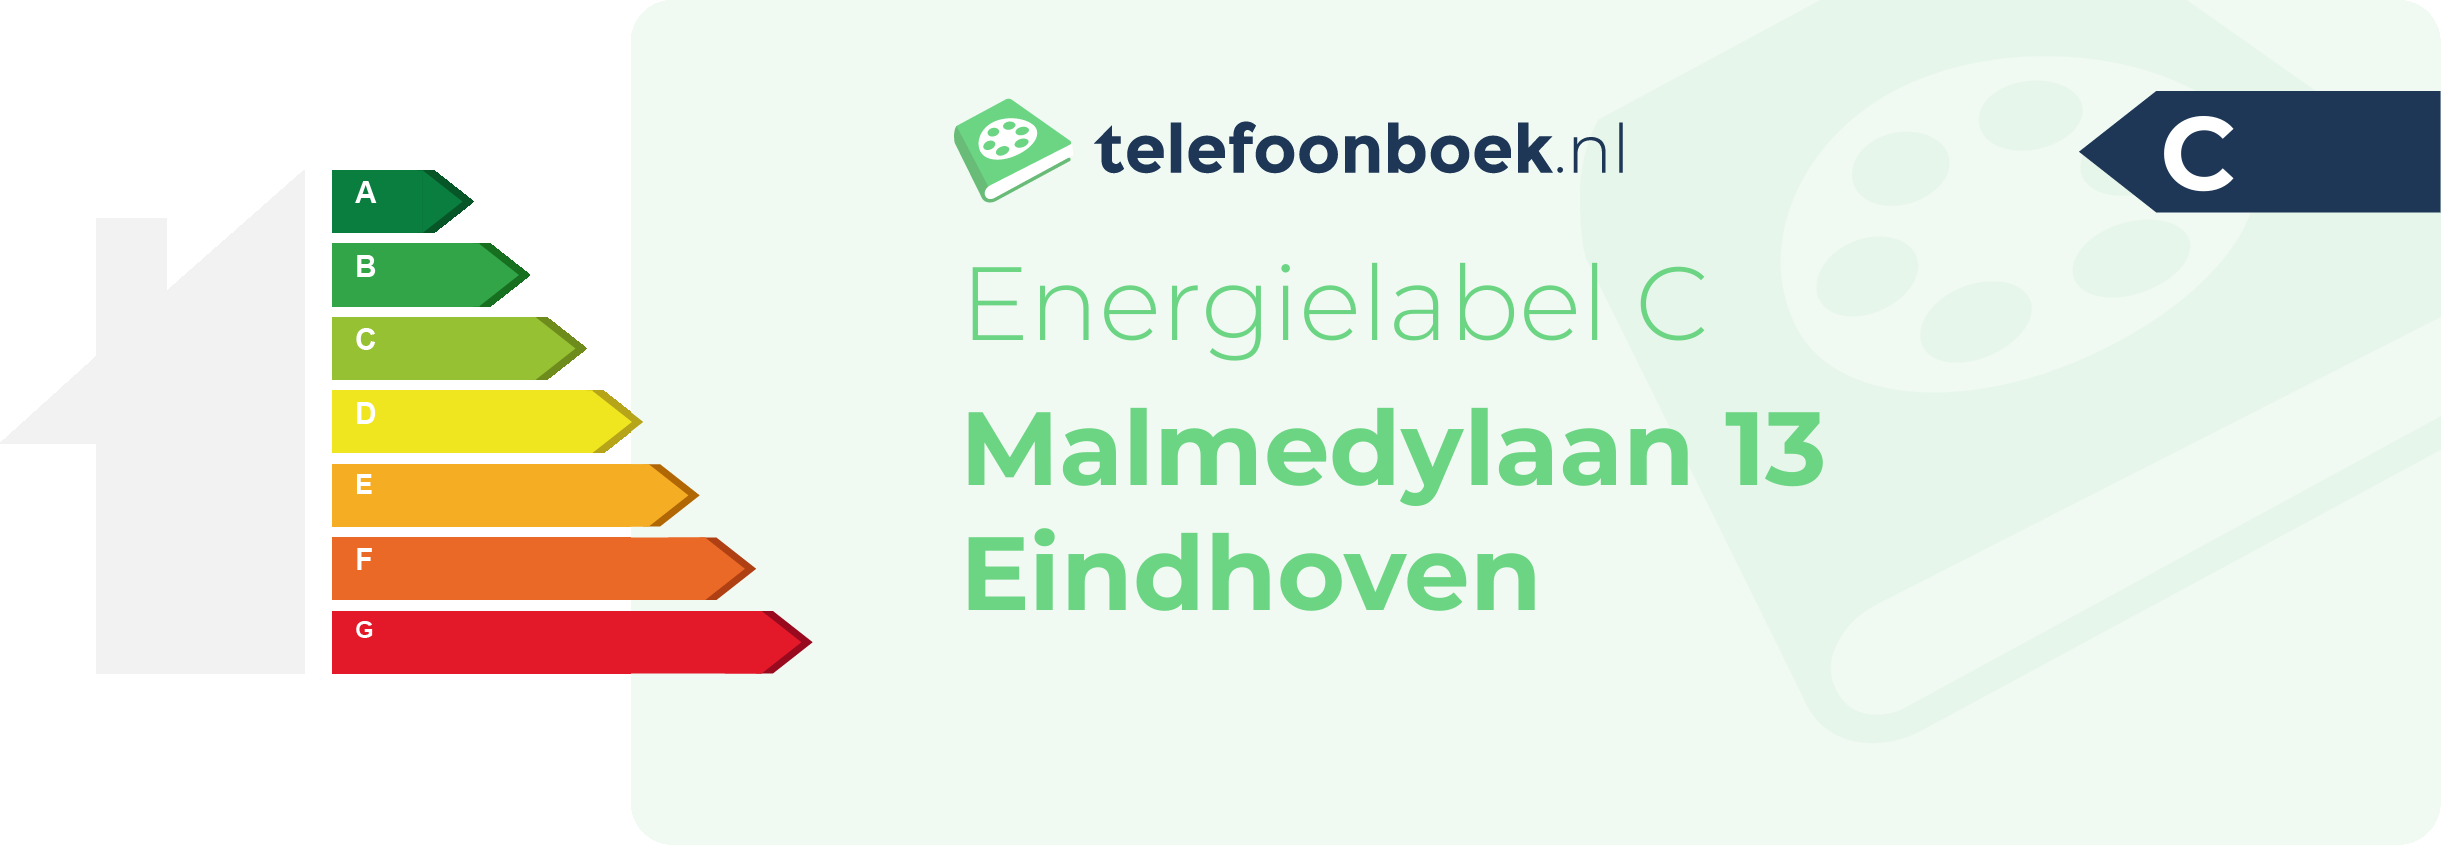 Energielabel Malmedylaan 13 Eindhoven